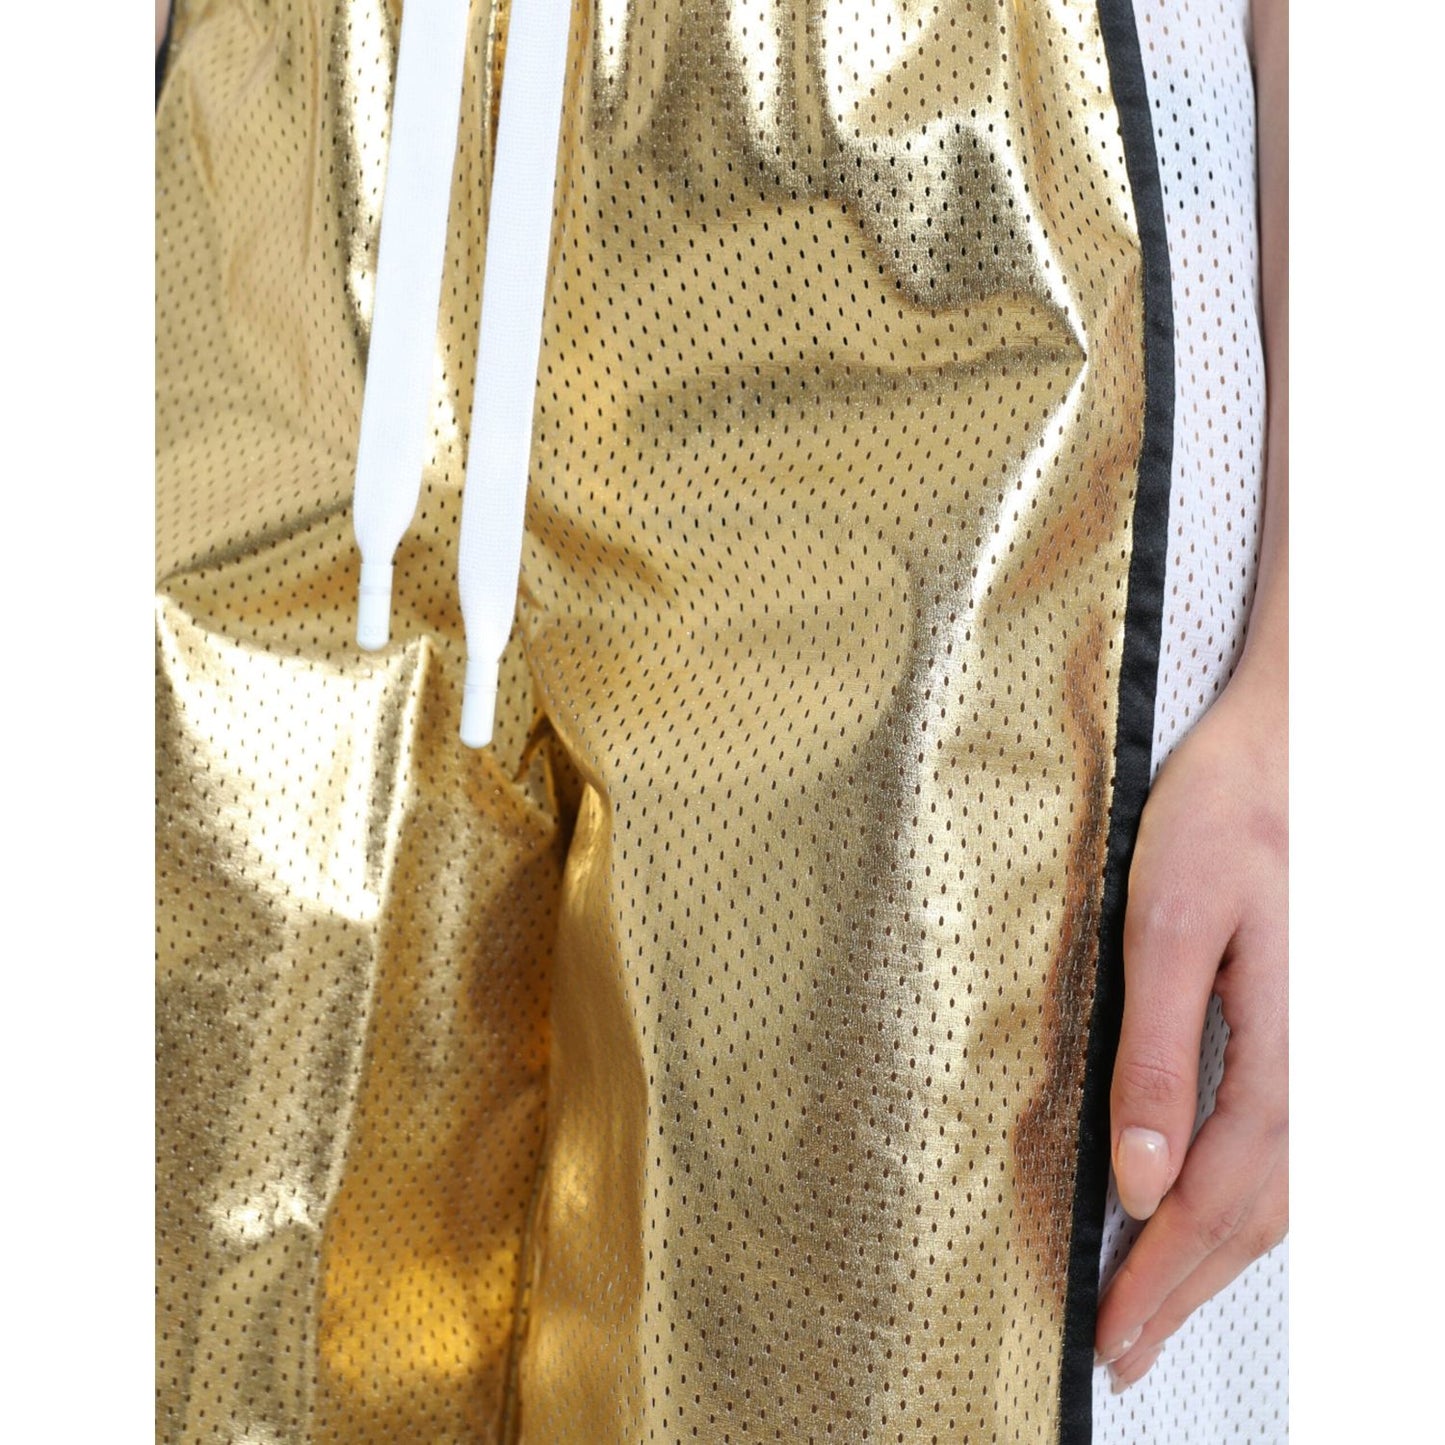 Dolce & Gabbana Elevated Elegance: High Waist Golden Shorts gold-polyester-perforated-high-waist-shorts